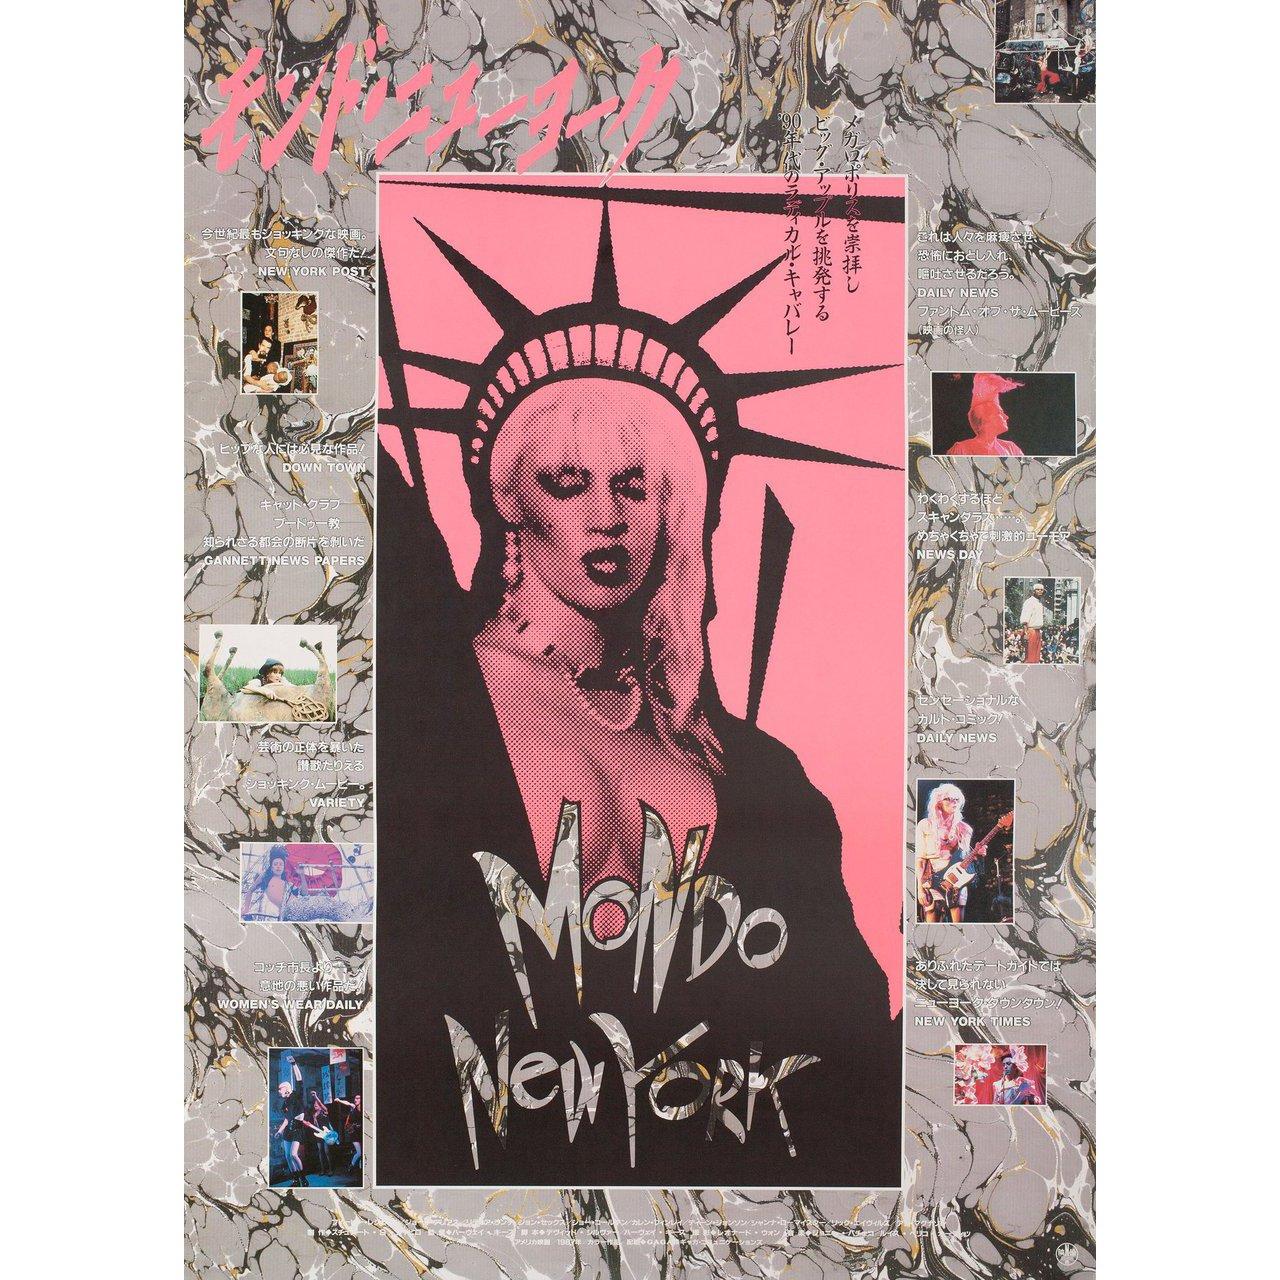 Paper Mondo New York 1988 Japanese B2 Film Poster